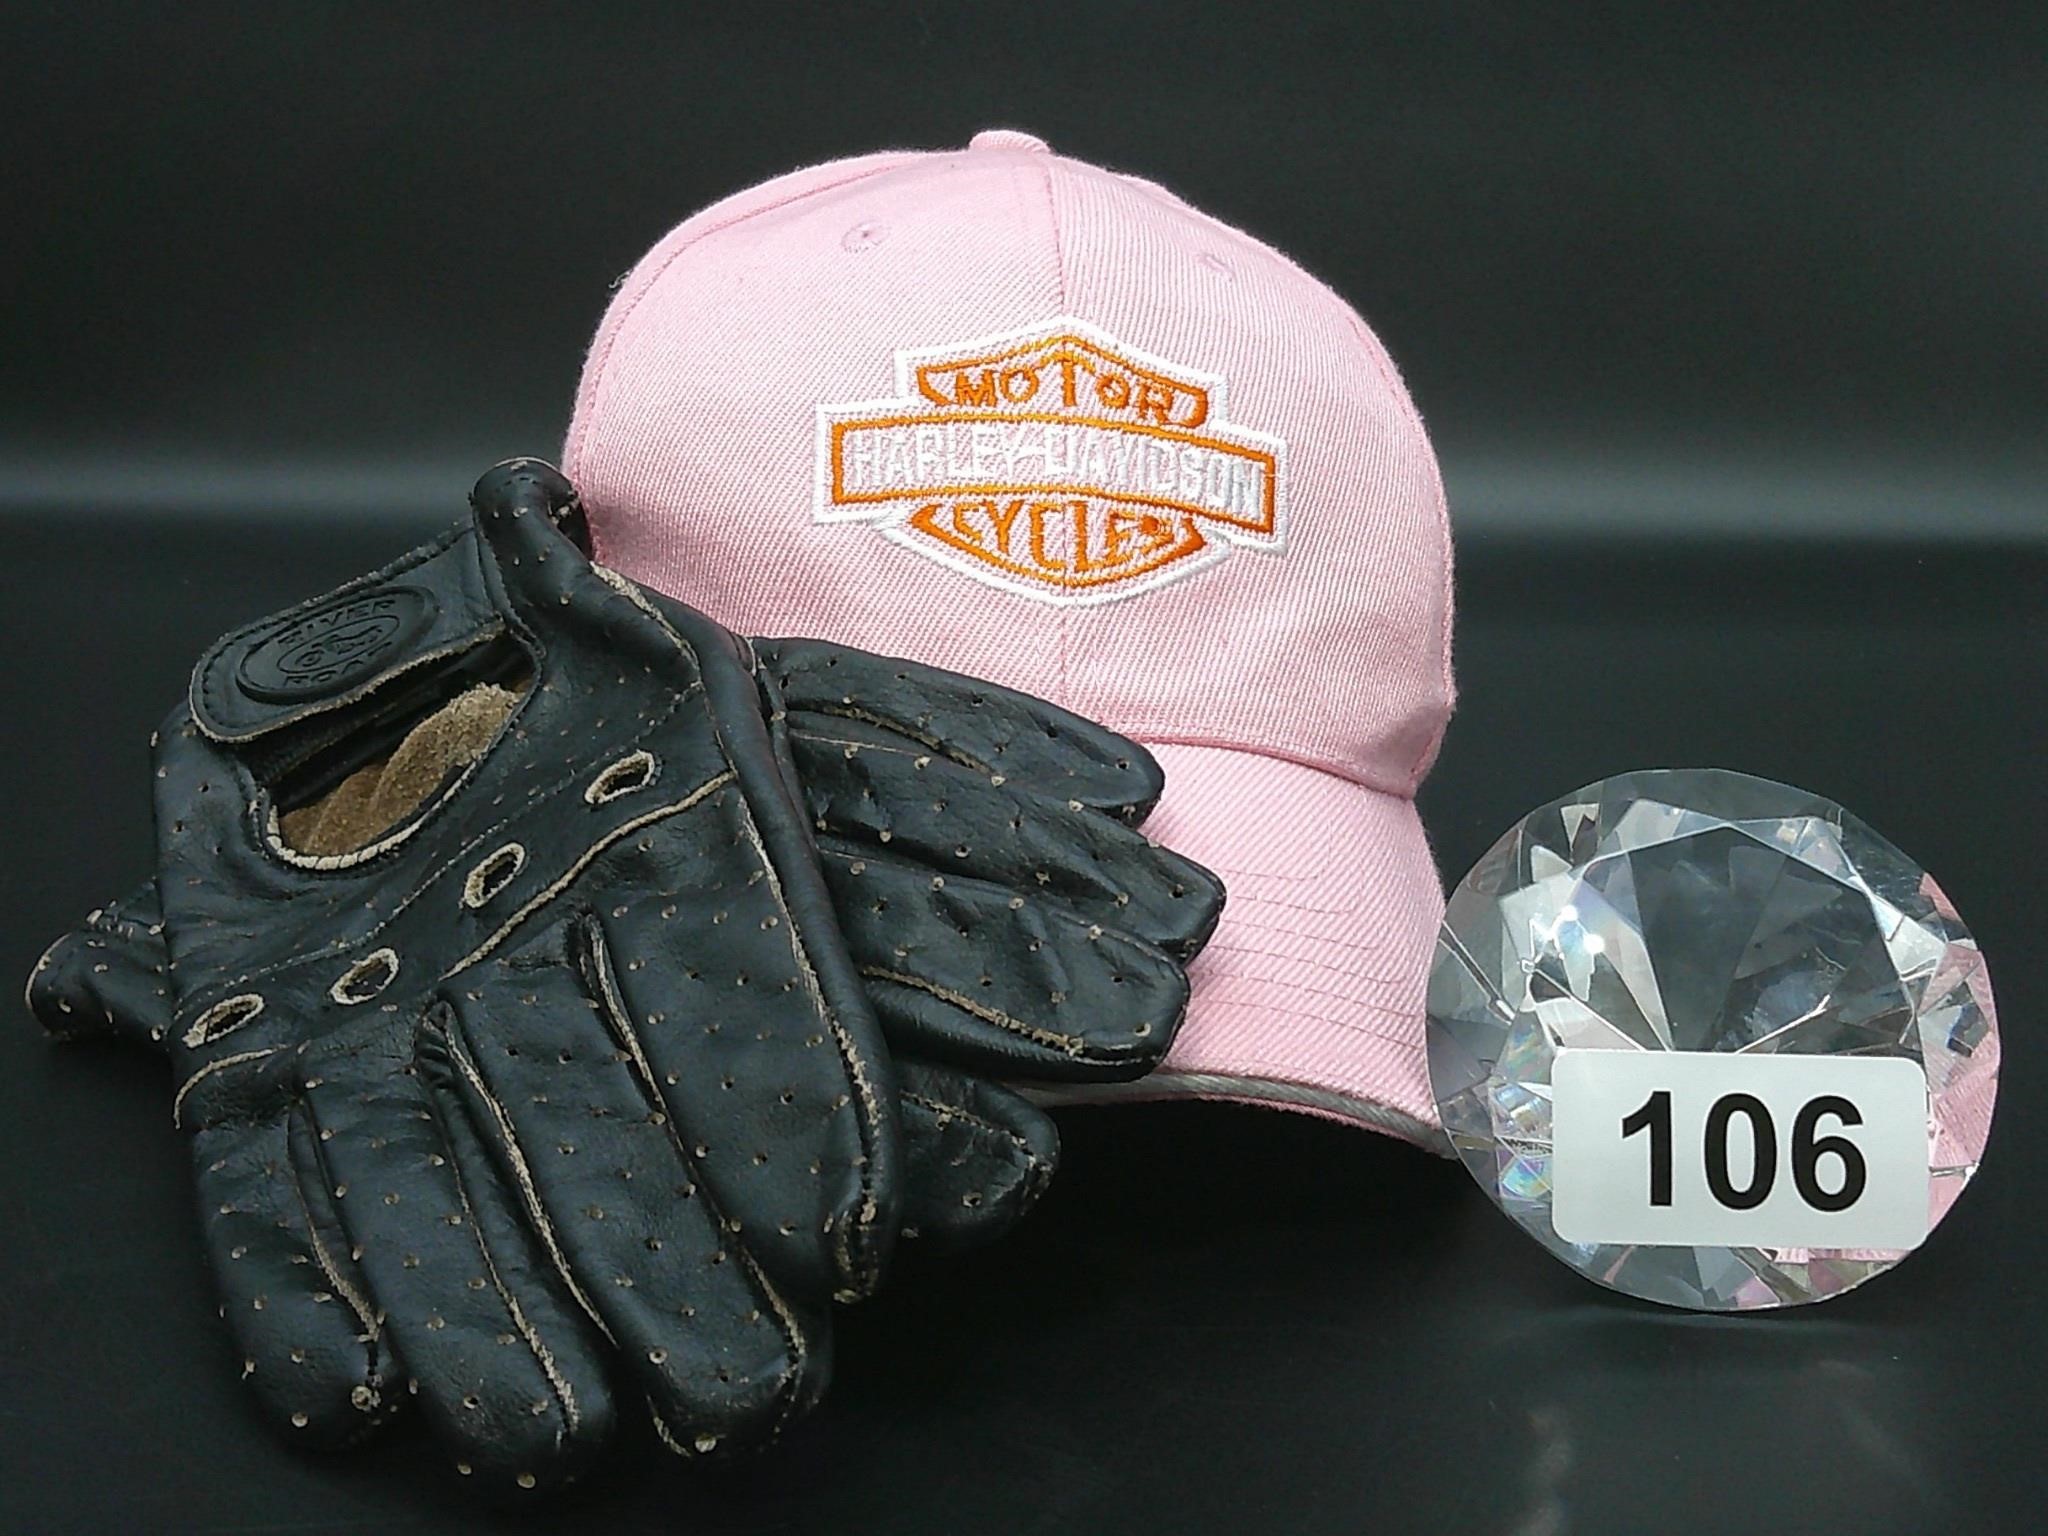 Pink Harley-Davidson ball cap and gloves